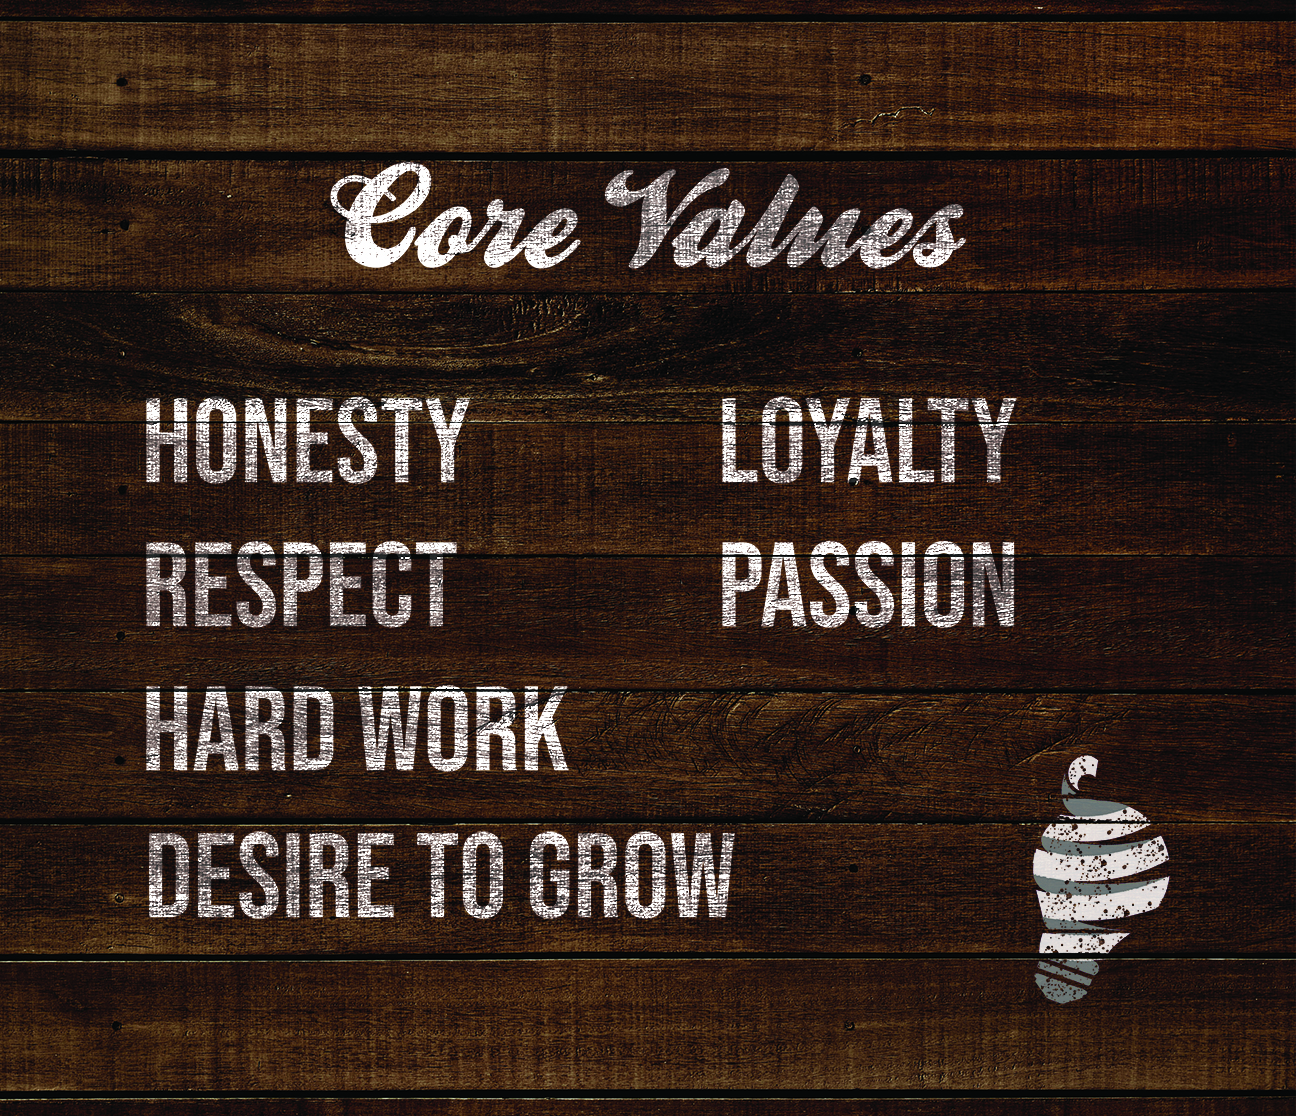 Core Values Sign